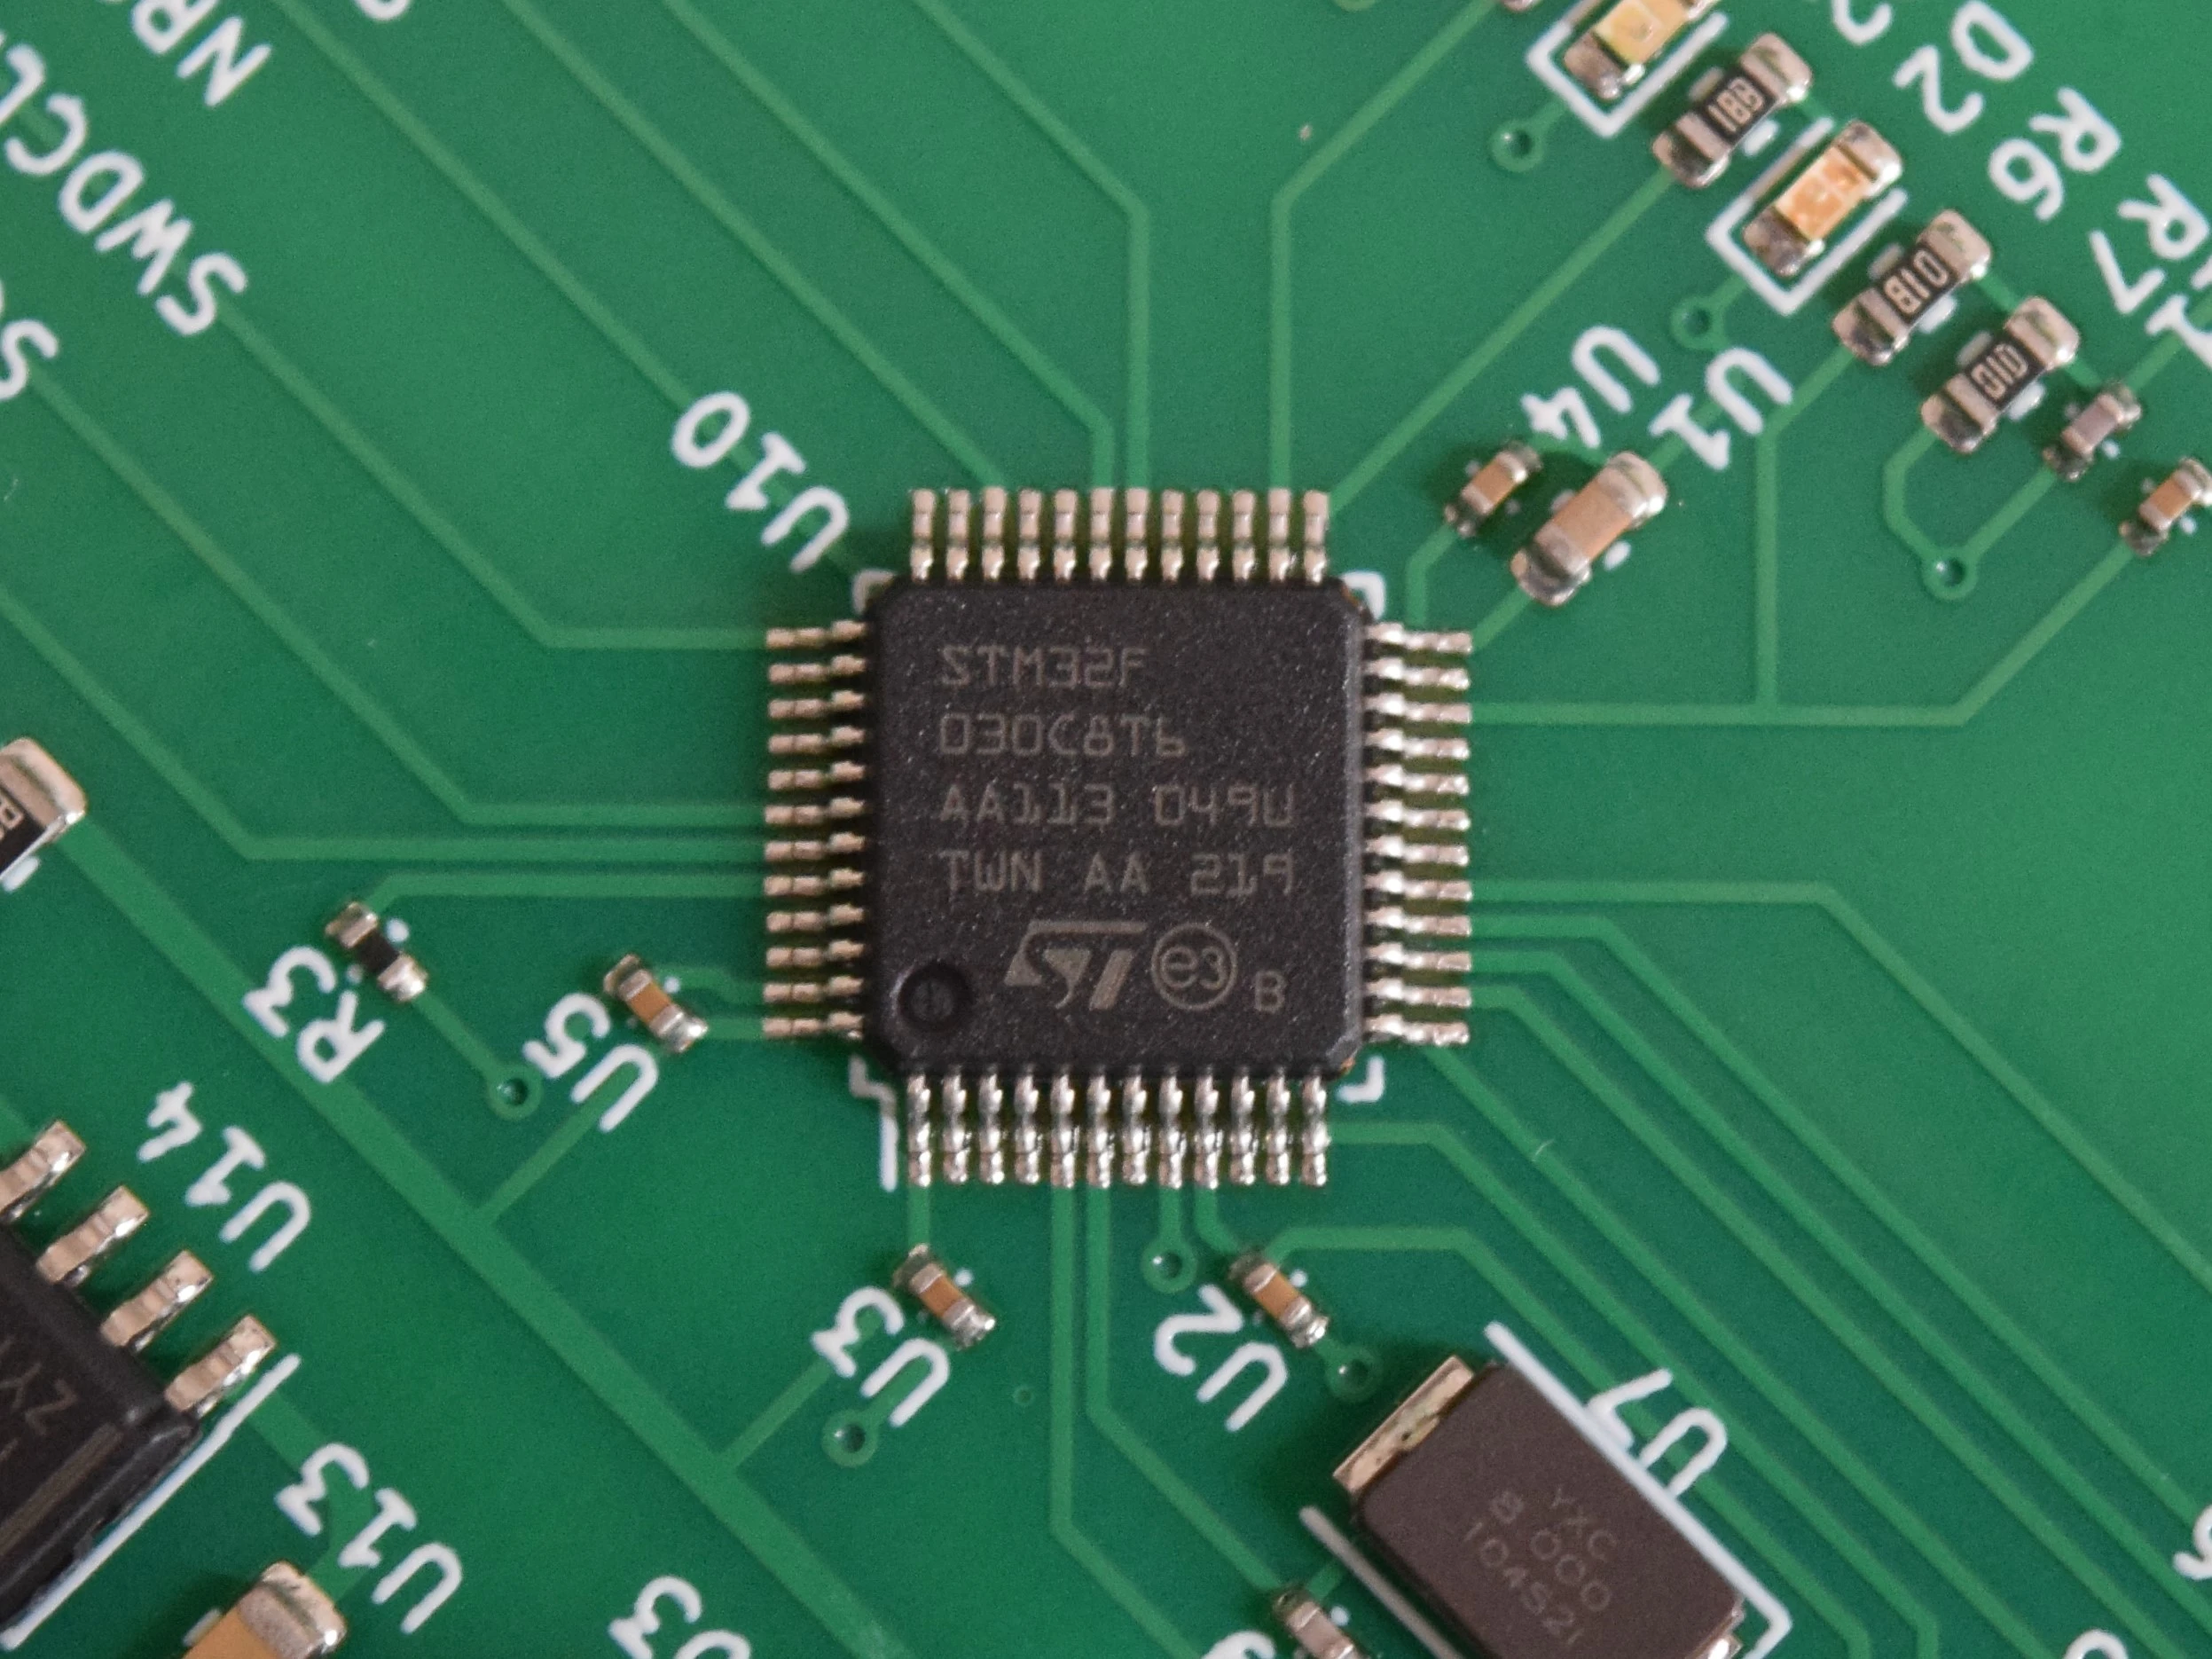 STM32F030C8T6 On Green PCB